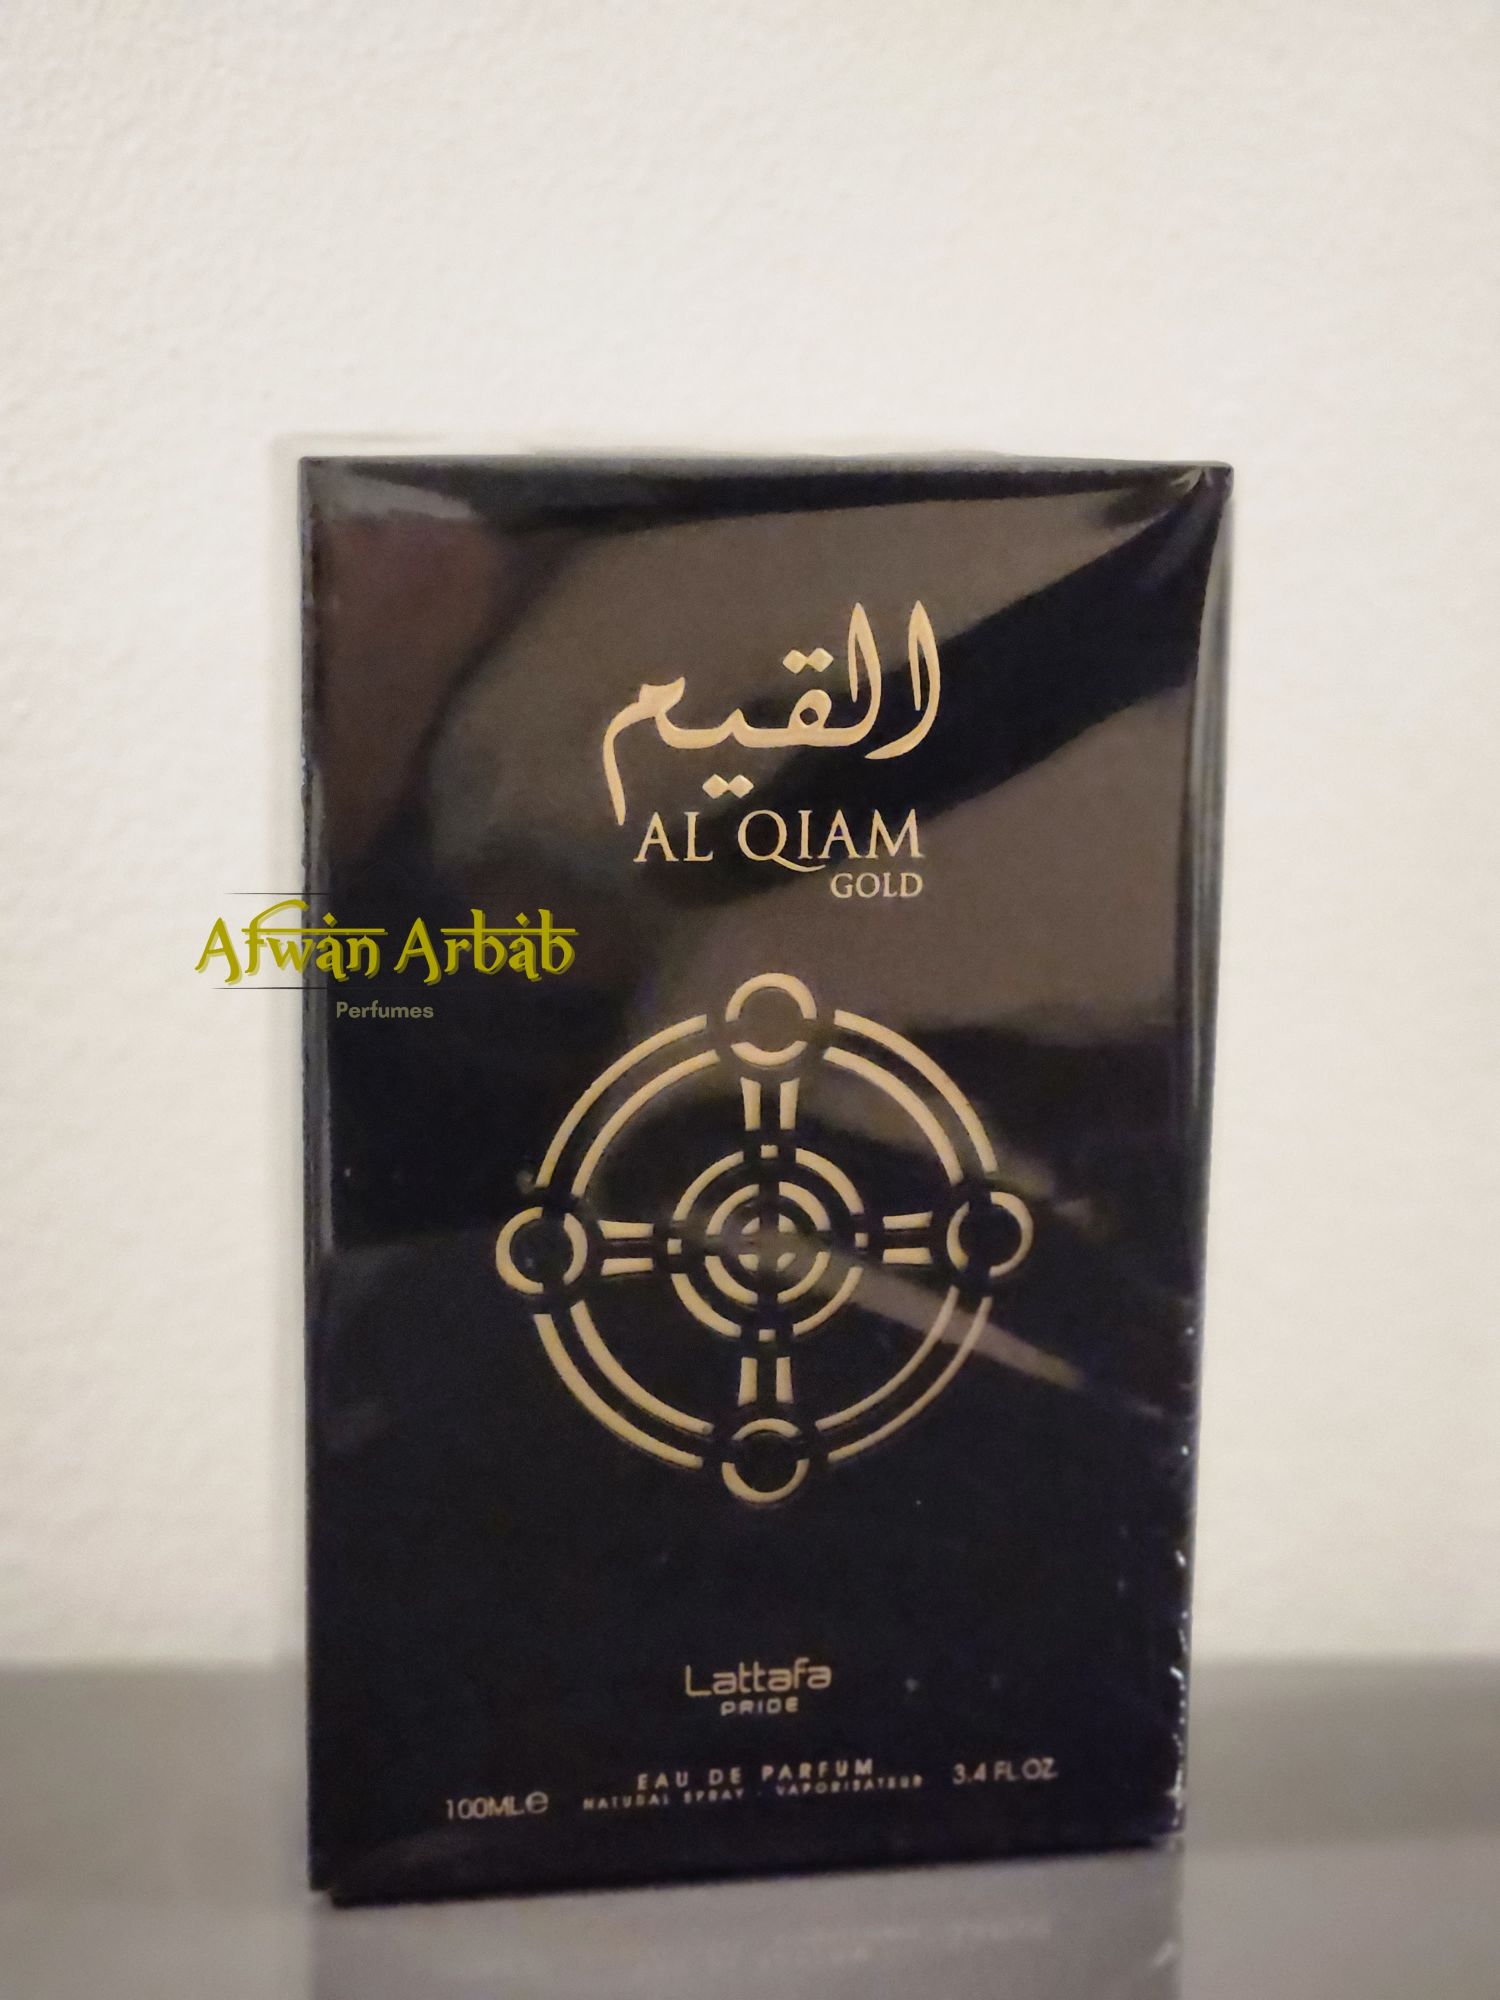 Al Qiam Silver EDP - 100mL (3.4 oz) by Lattafa Pride